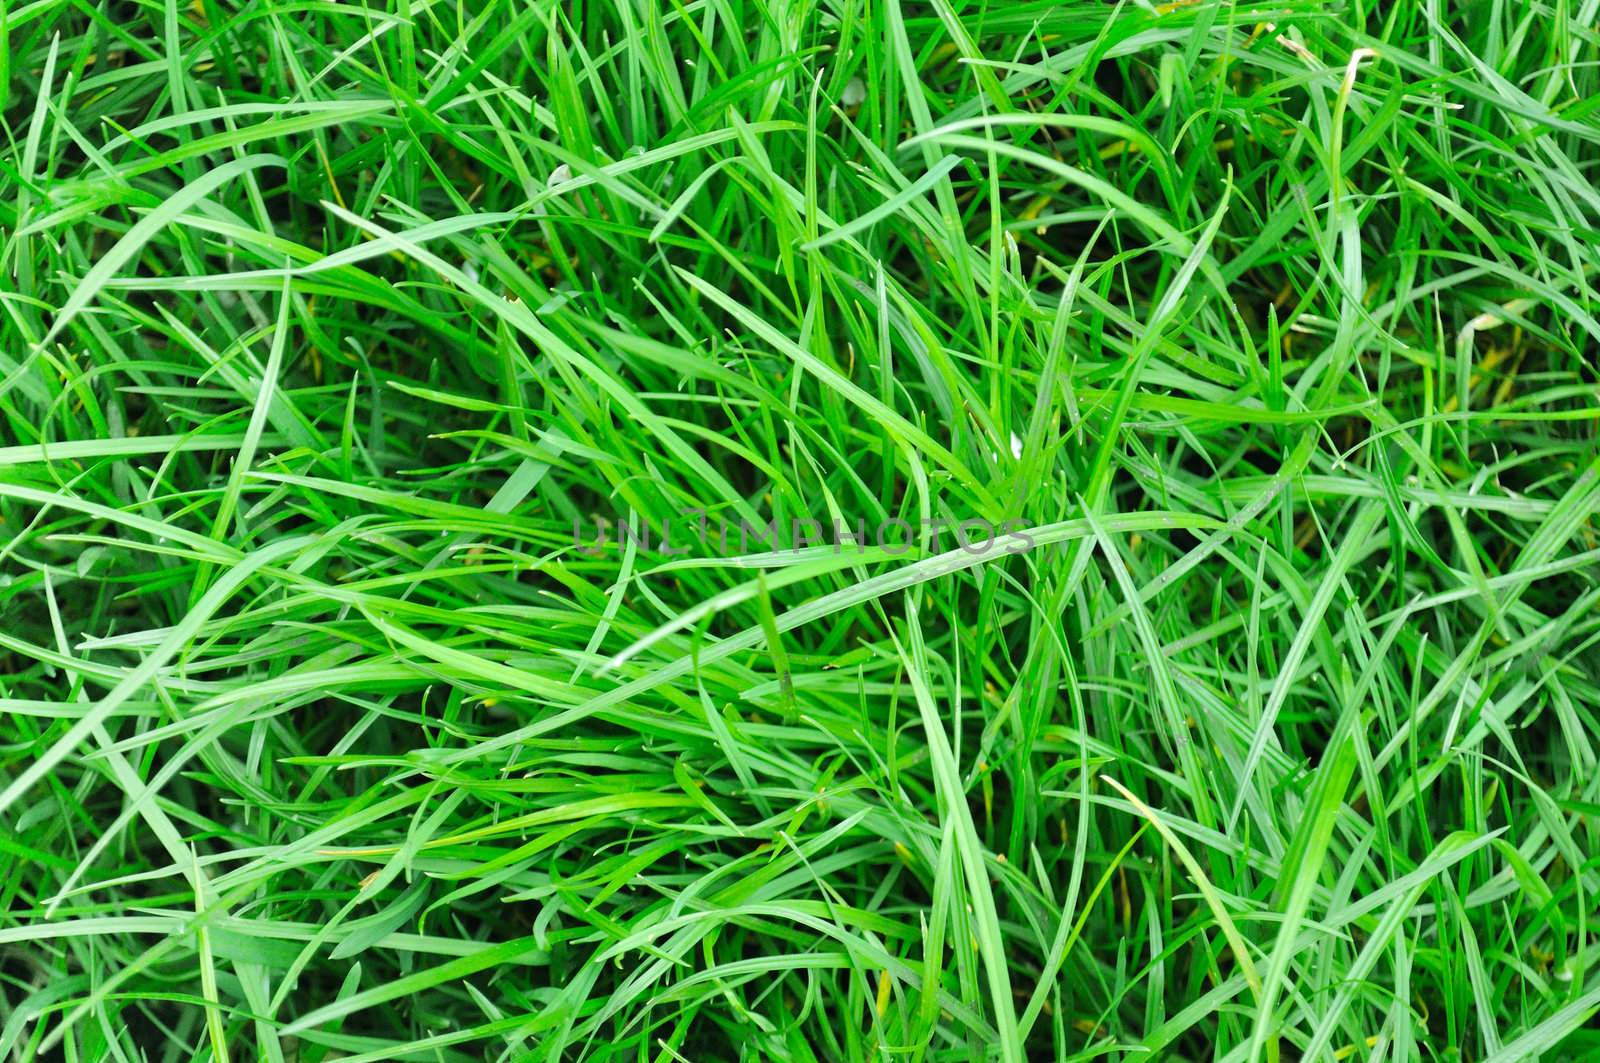 Fresh spring field grass (wheat grass) as a background